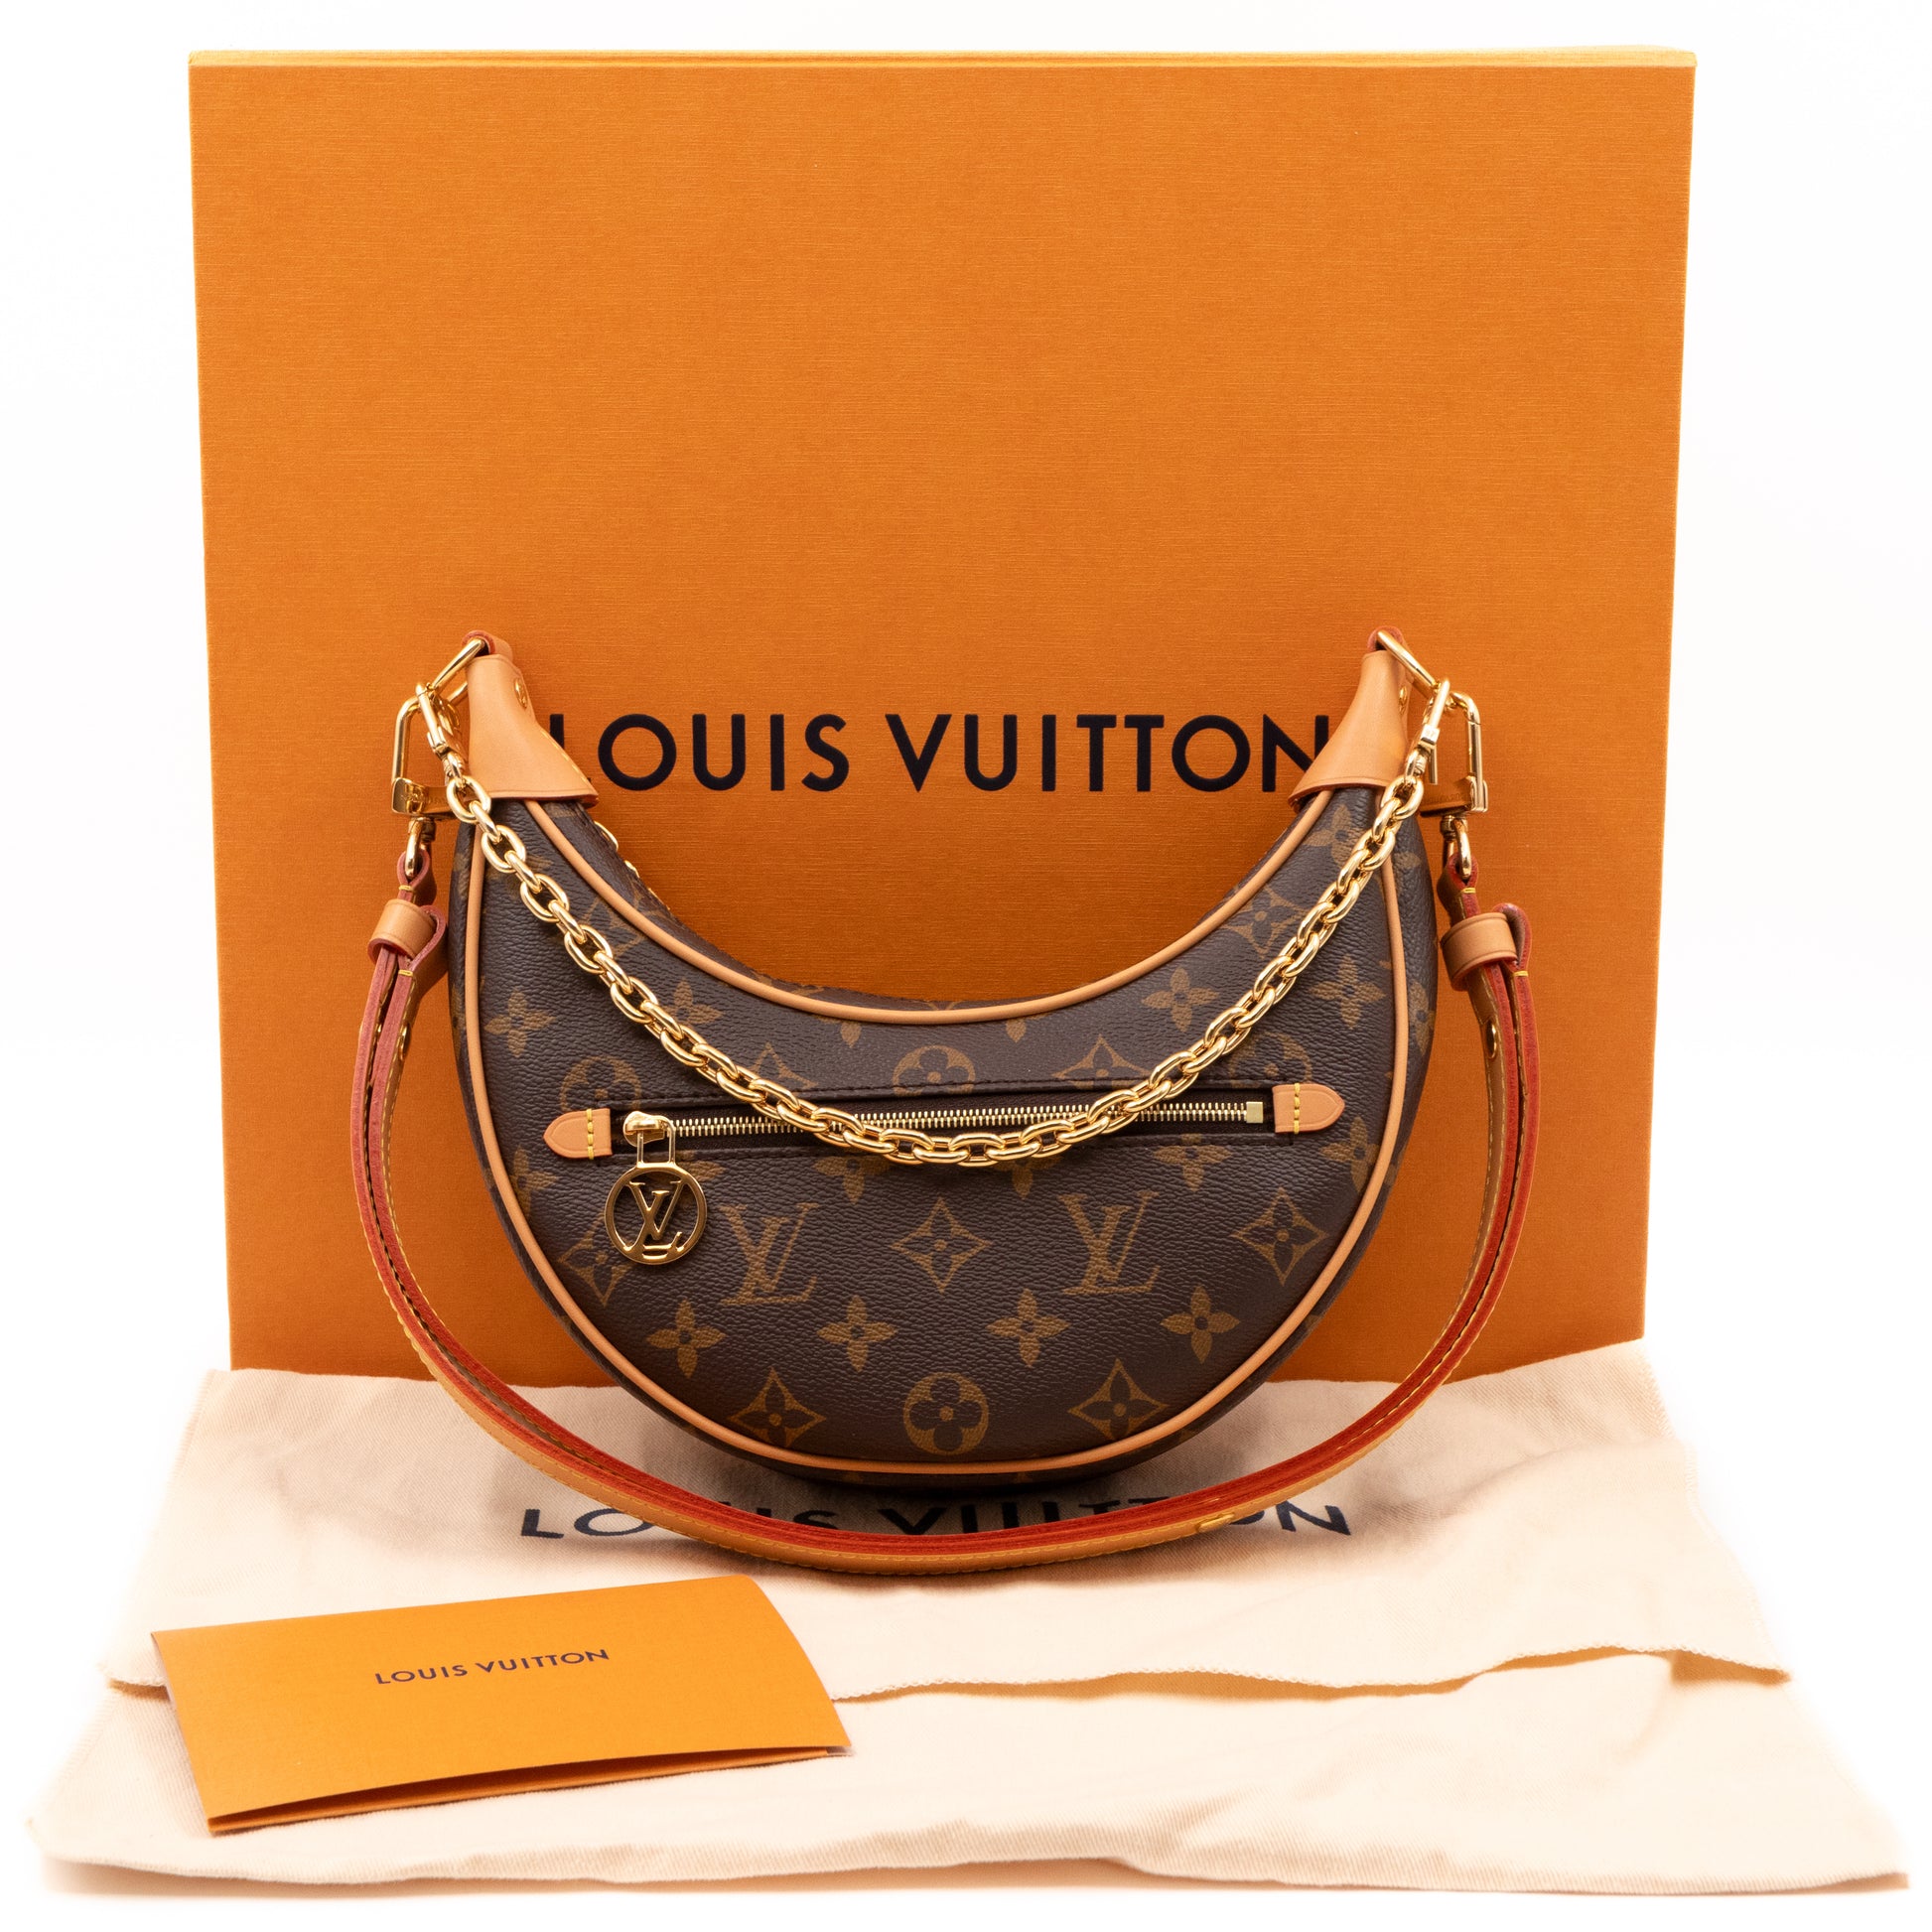 Louis Vuitton – Louis Vuitton Loop Bag Monogram – Queen Station